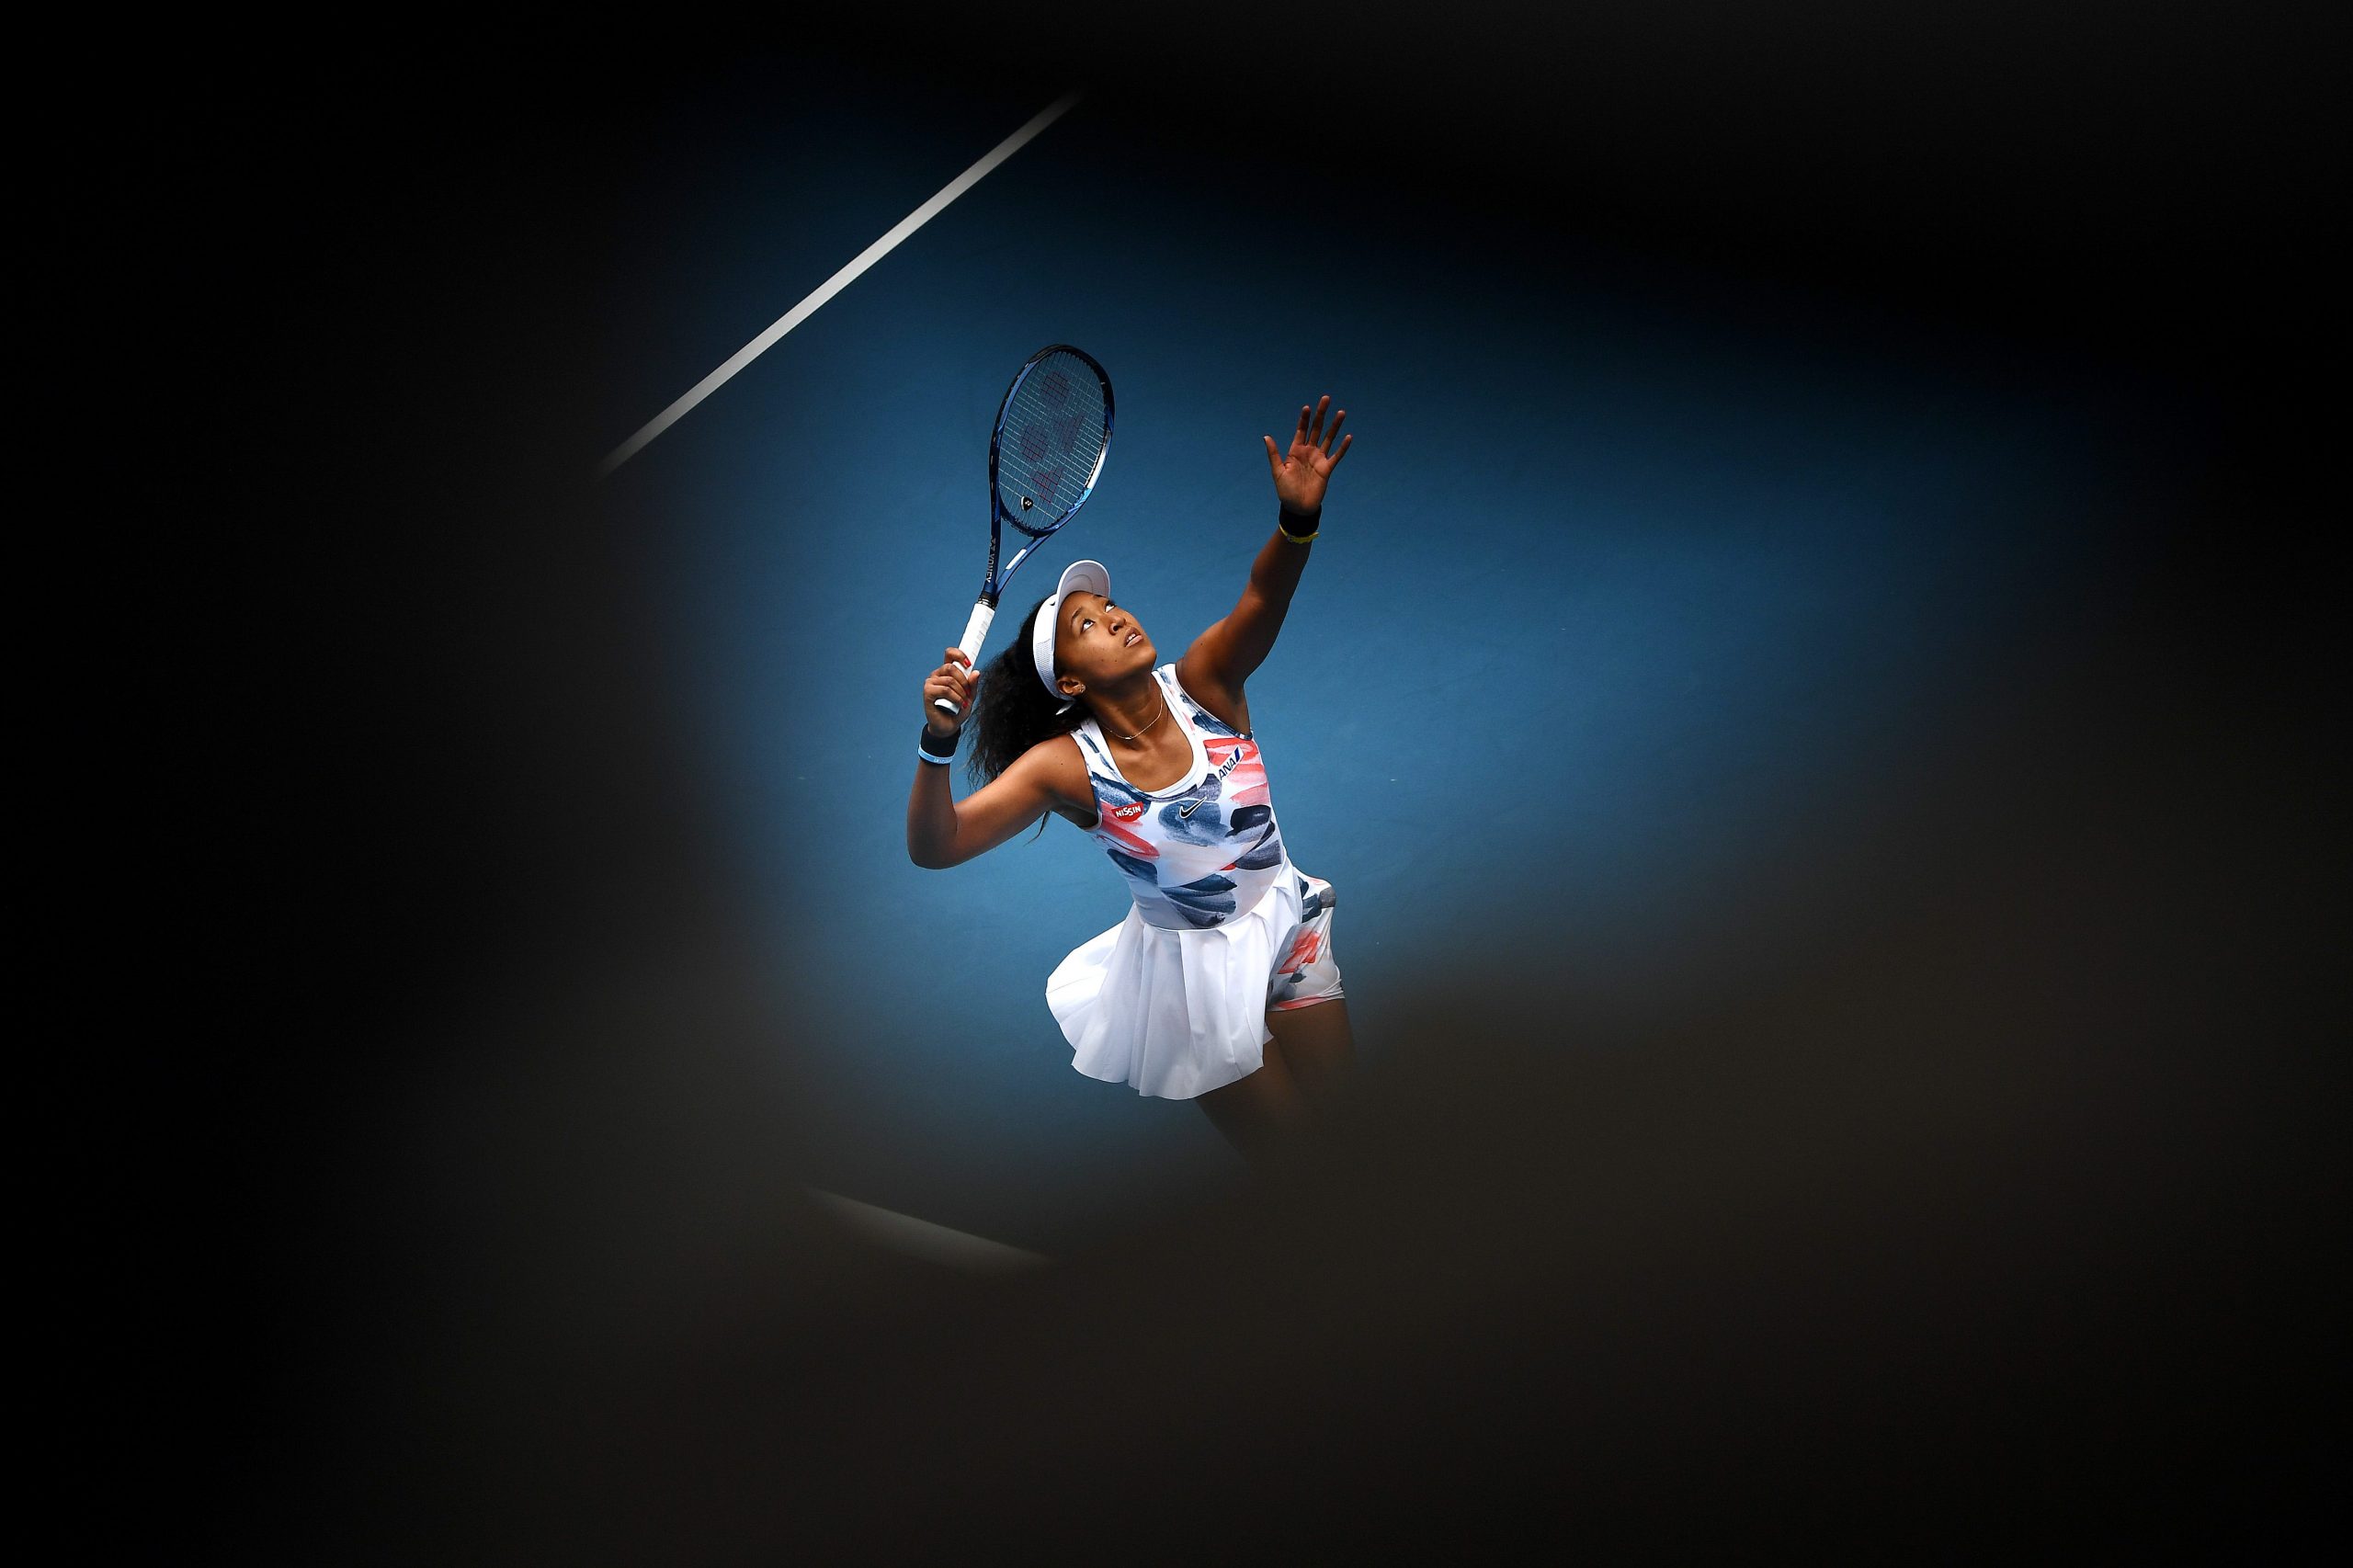 Naomi Osaka serves during a match at the 2020 Australian Open